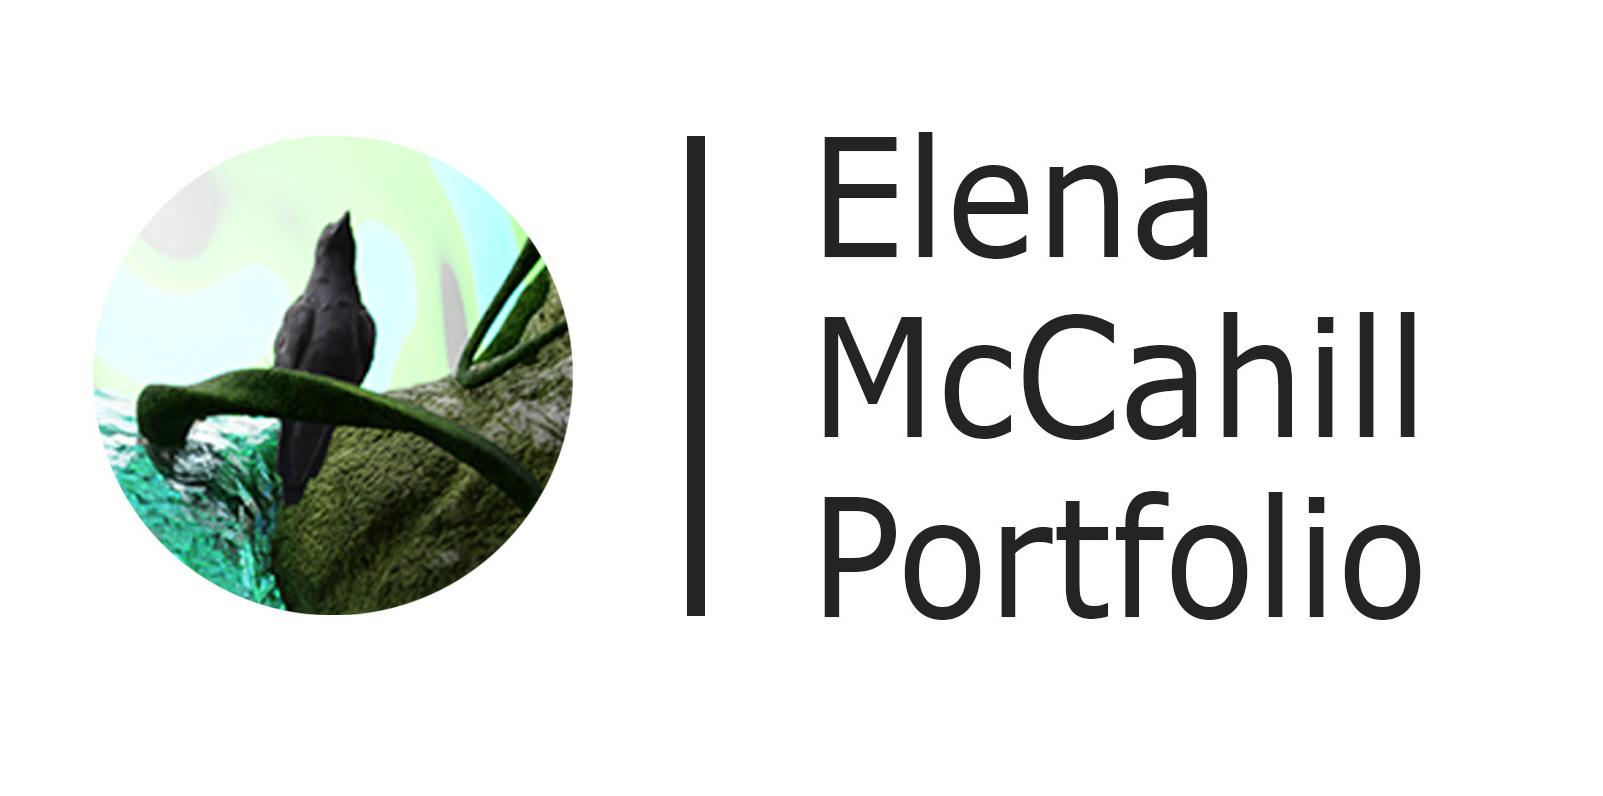 Elena Mccahill Portfolio